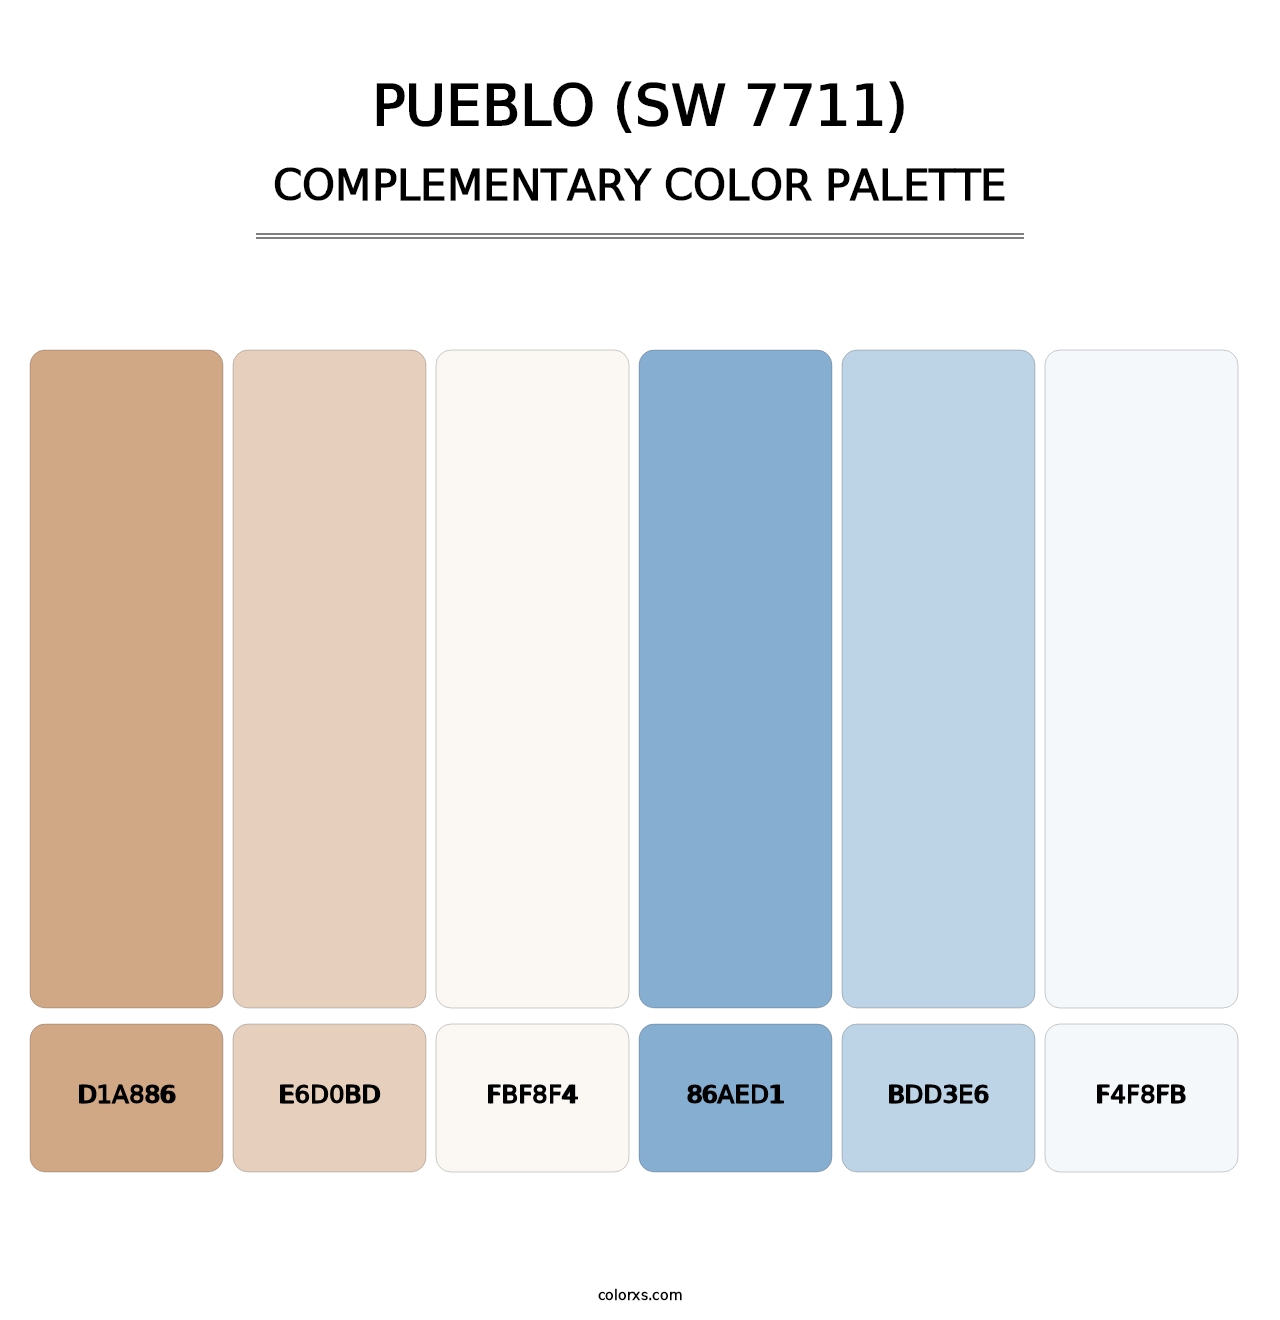 Pueblo (SW 7711) - Complementary Color Palette